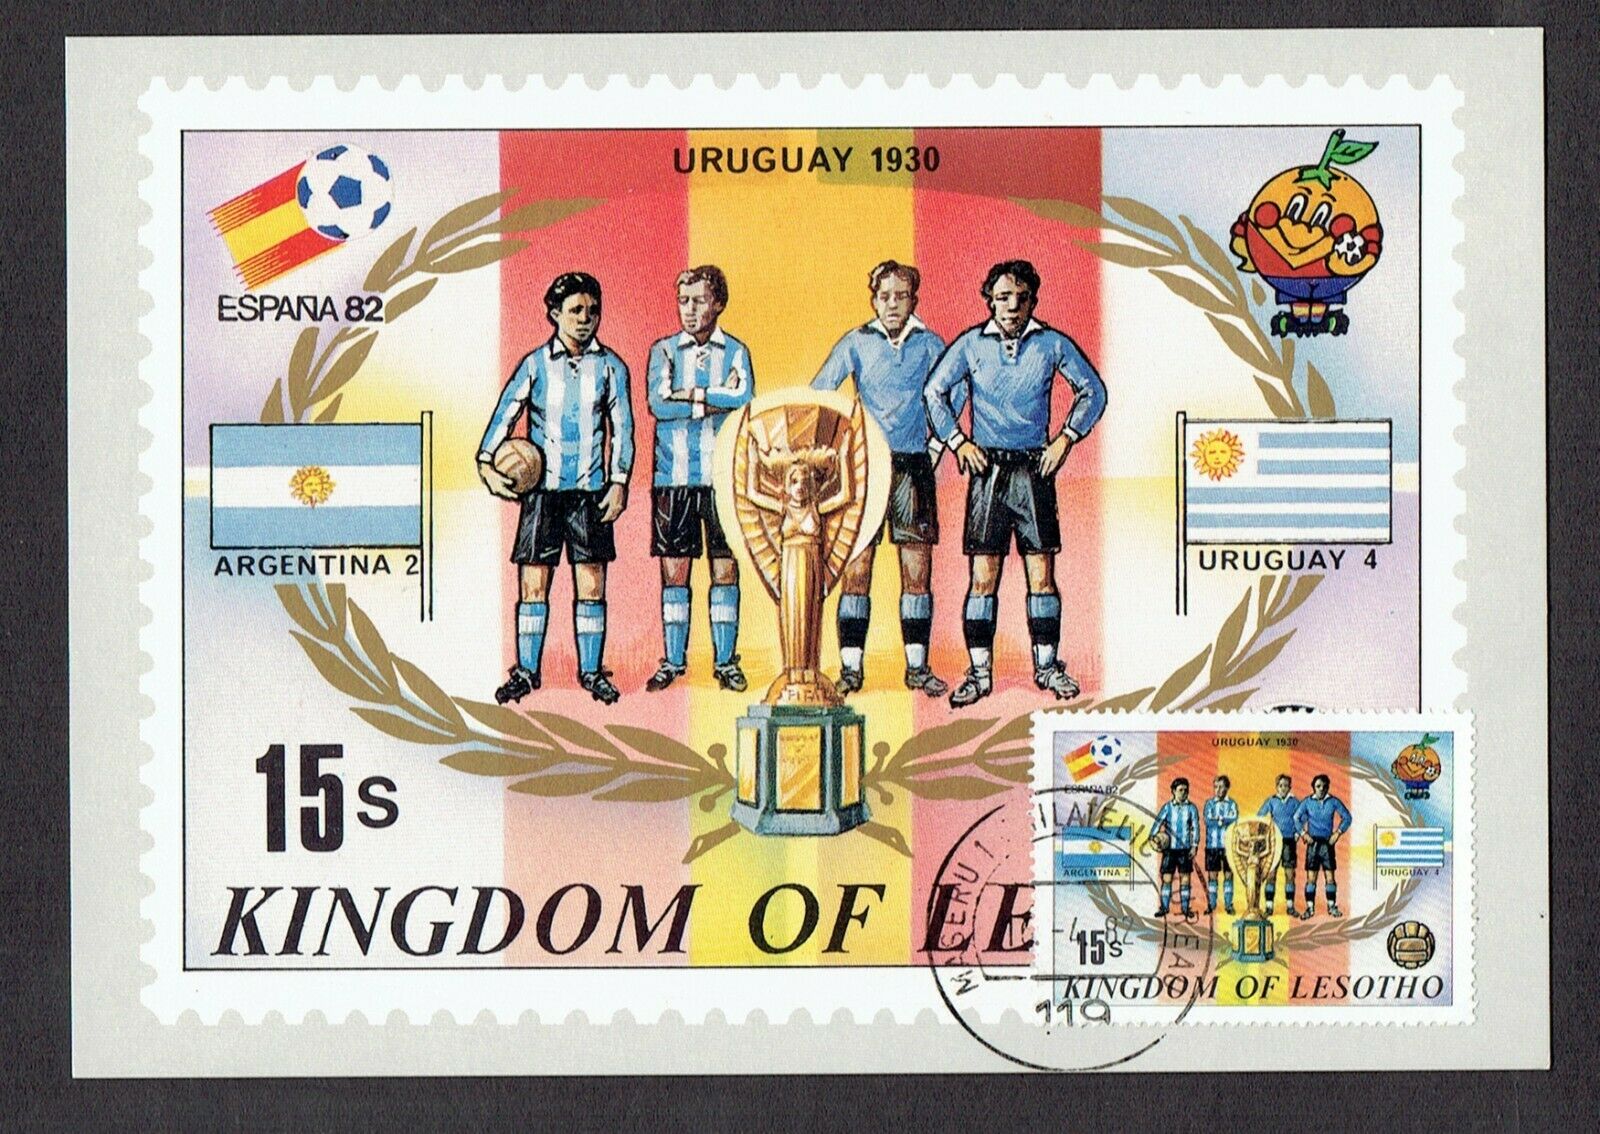 World Cup "espana 82", Kingdom Of Lesotho Stamp Postcard, Uruguay 1930